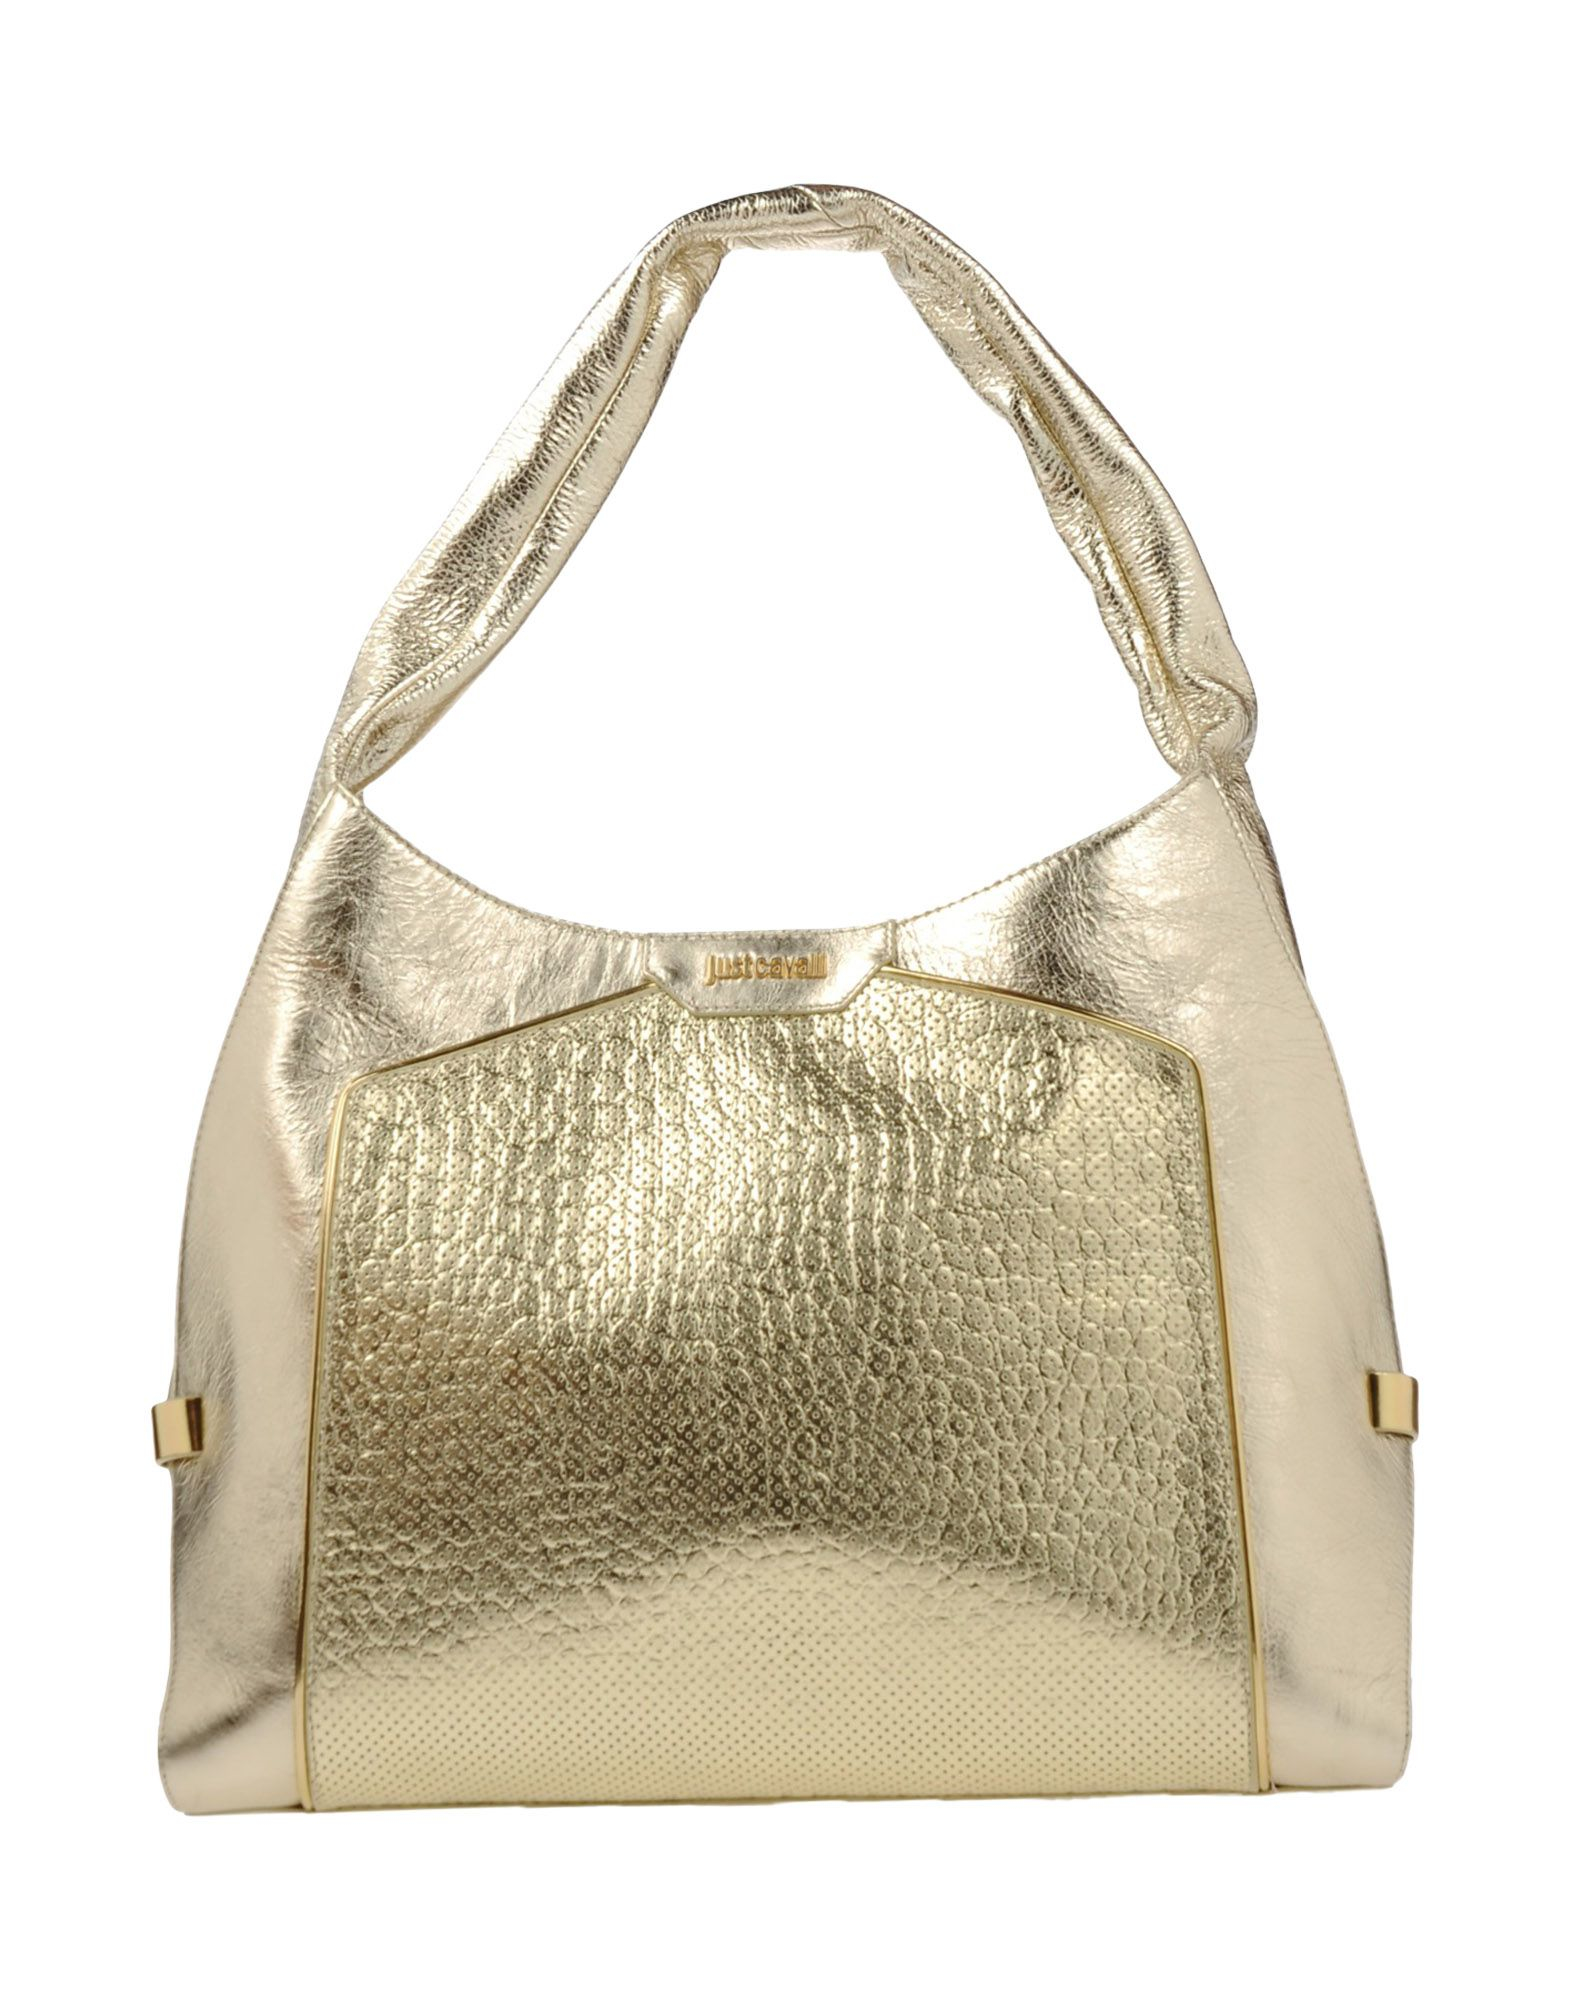 Just cavalli Shoulder Bag in Gold (Platinum) | Lyst